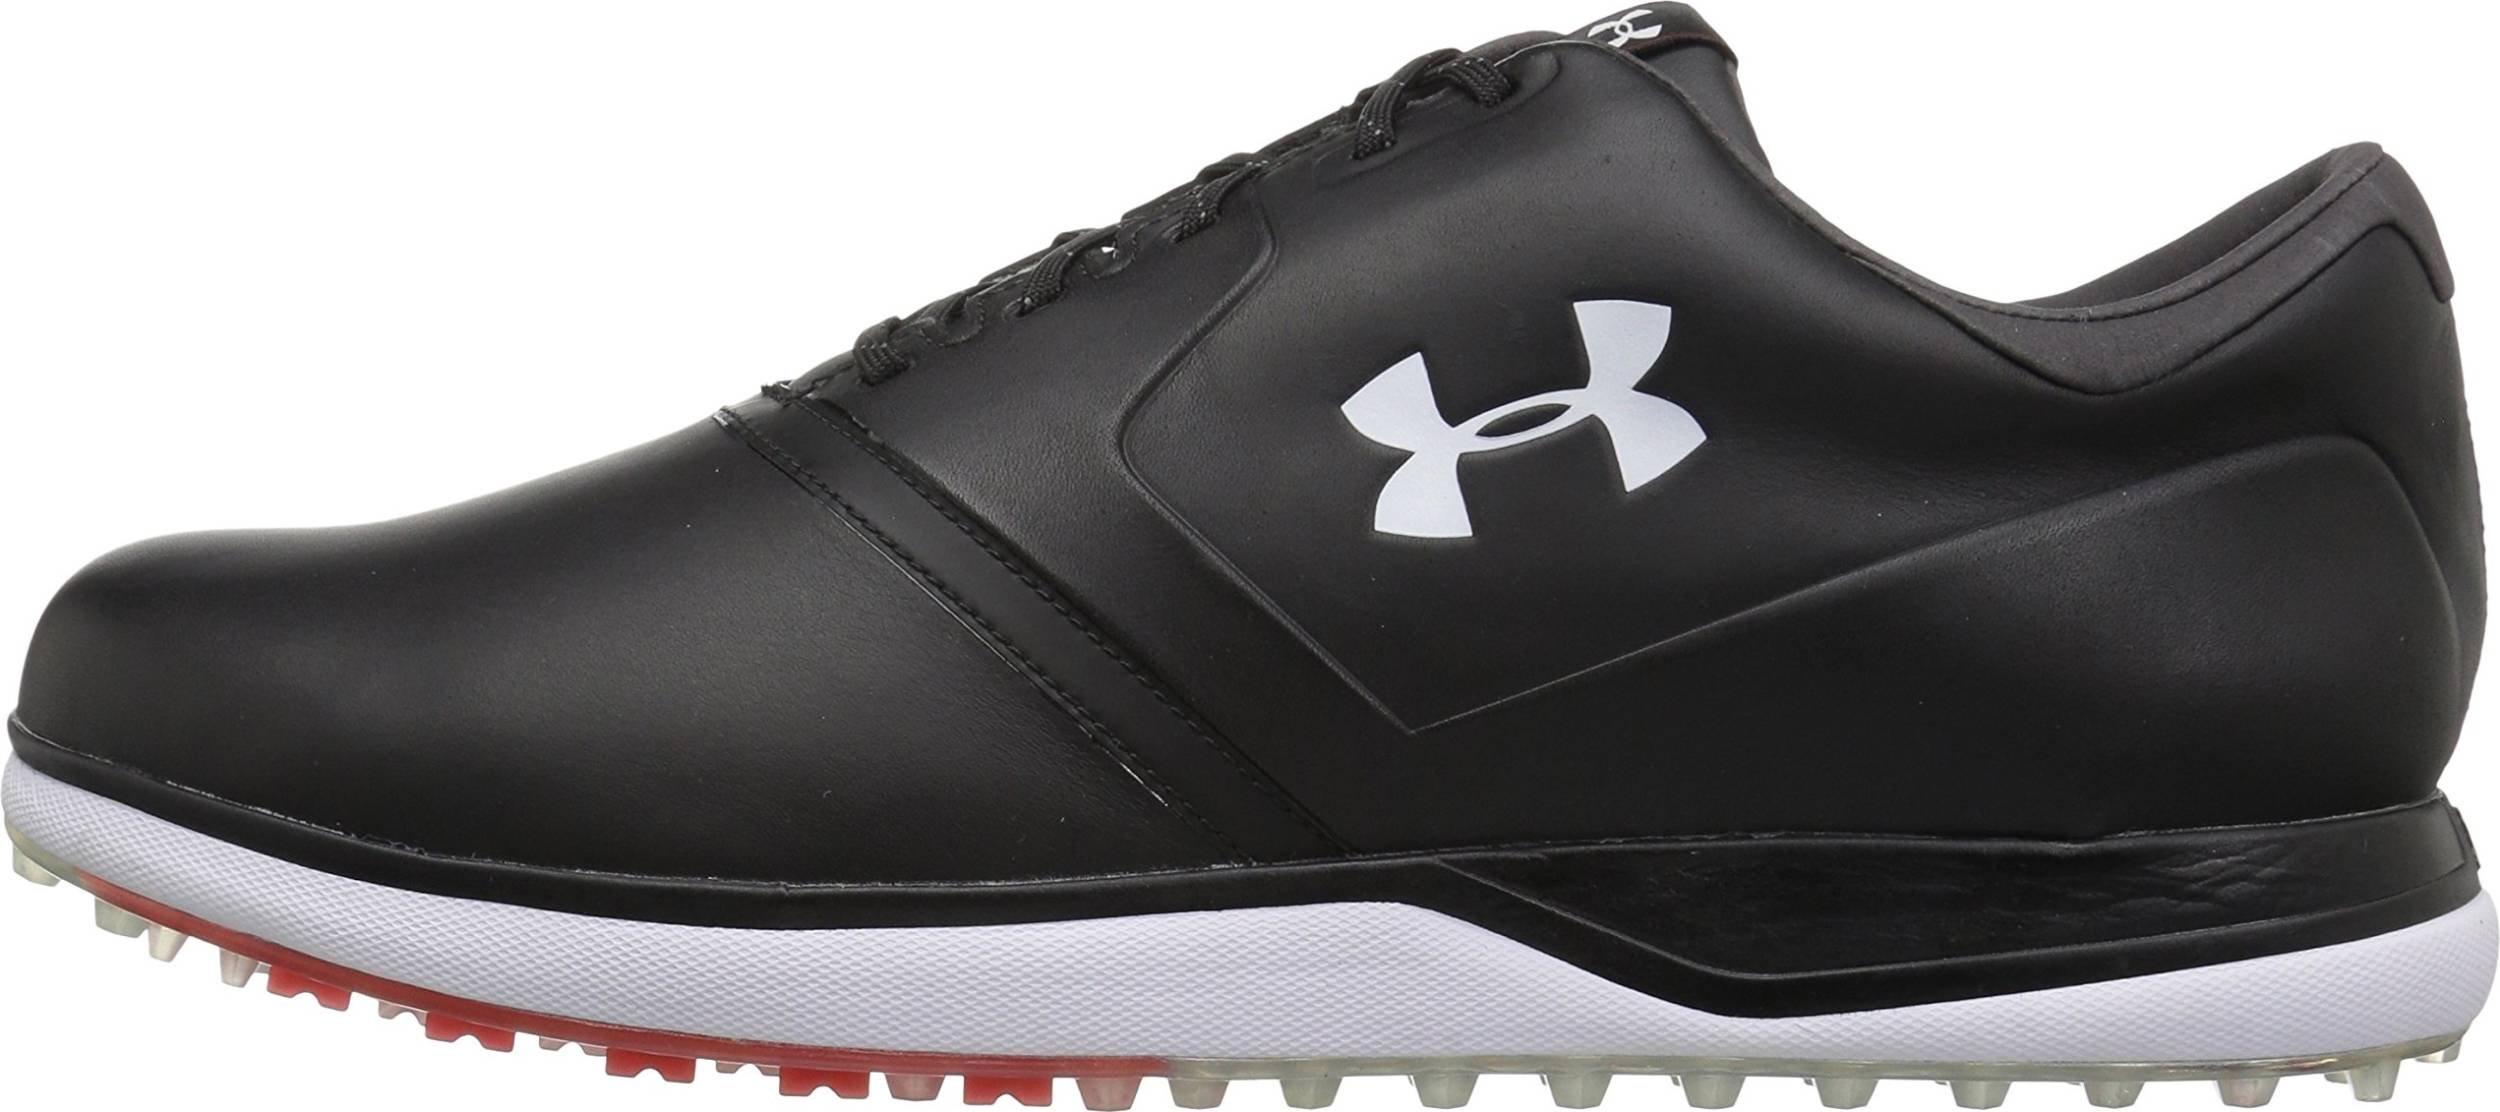 Black Under Armour Golf Shoes 